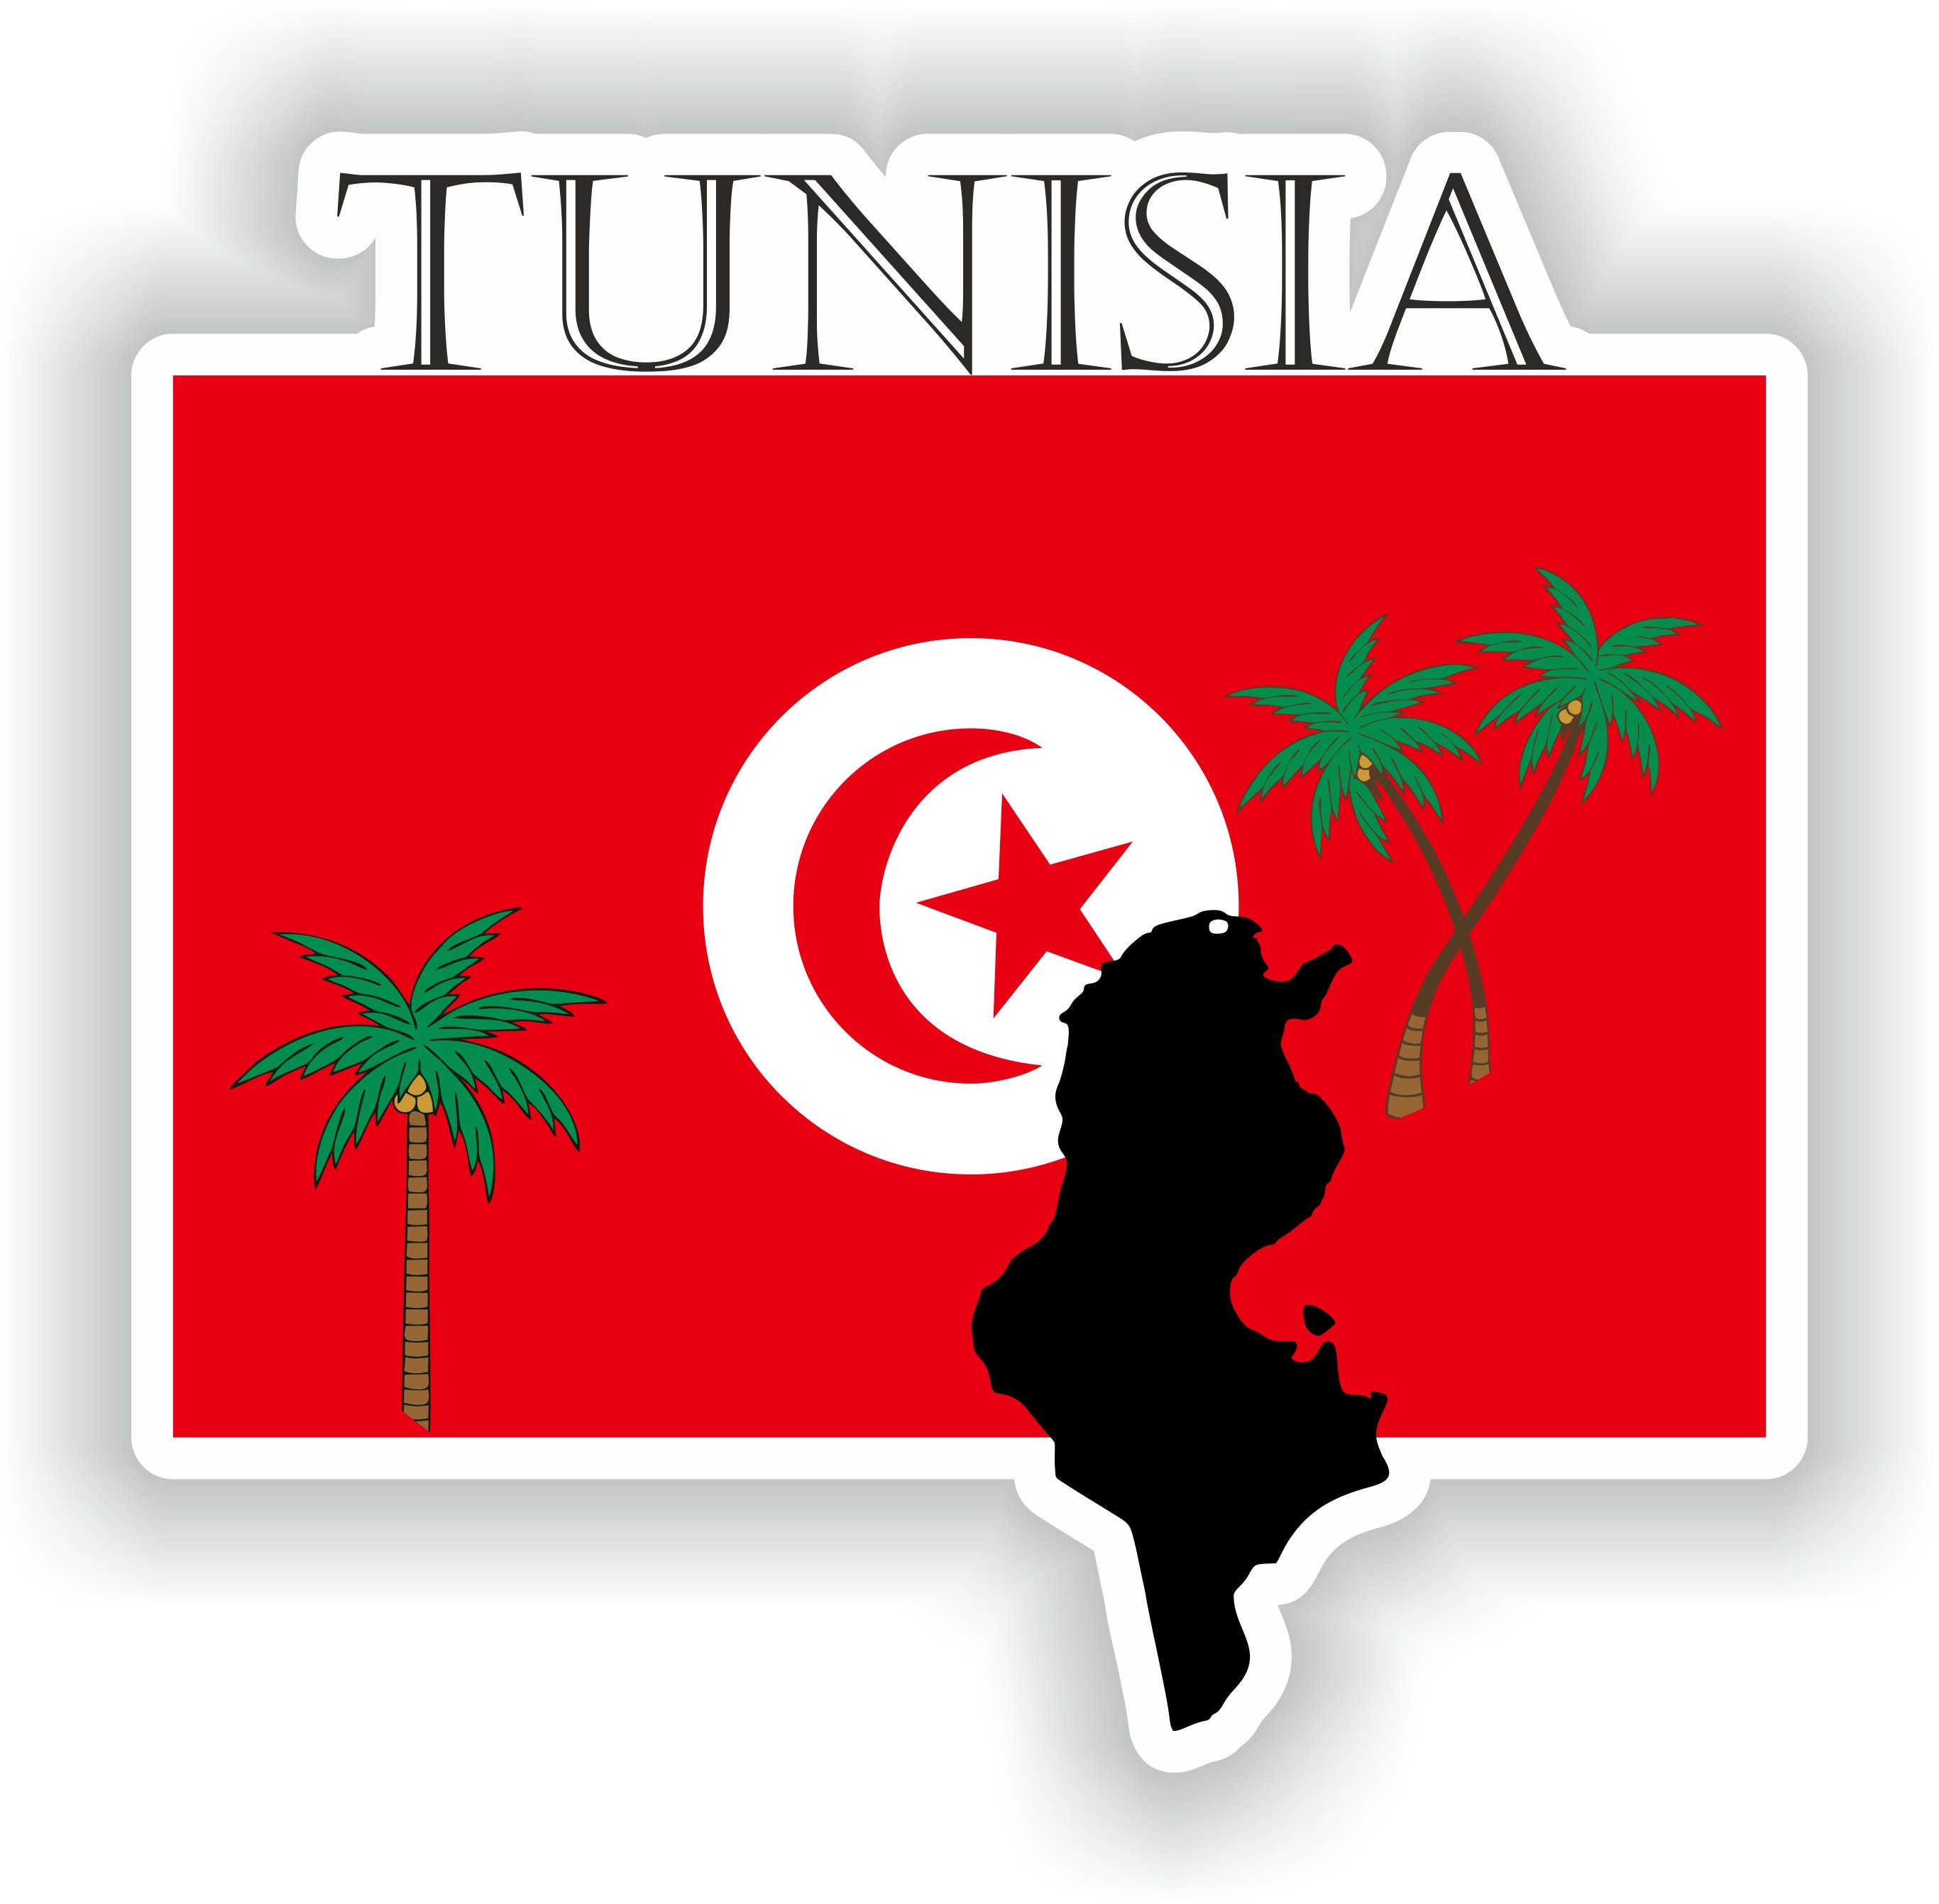 Tunisia Sticker Flag MF for Laptop Book Fridge Guitar Motorcycle